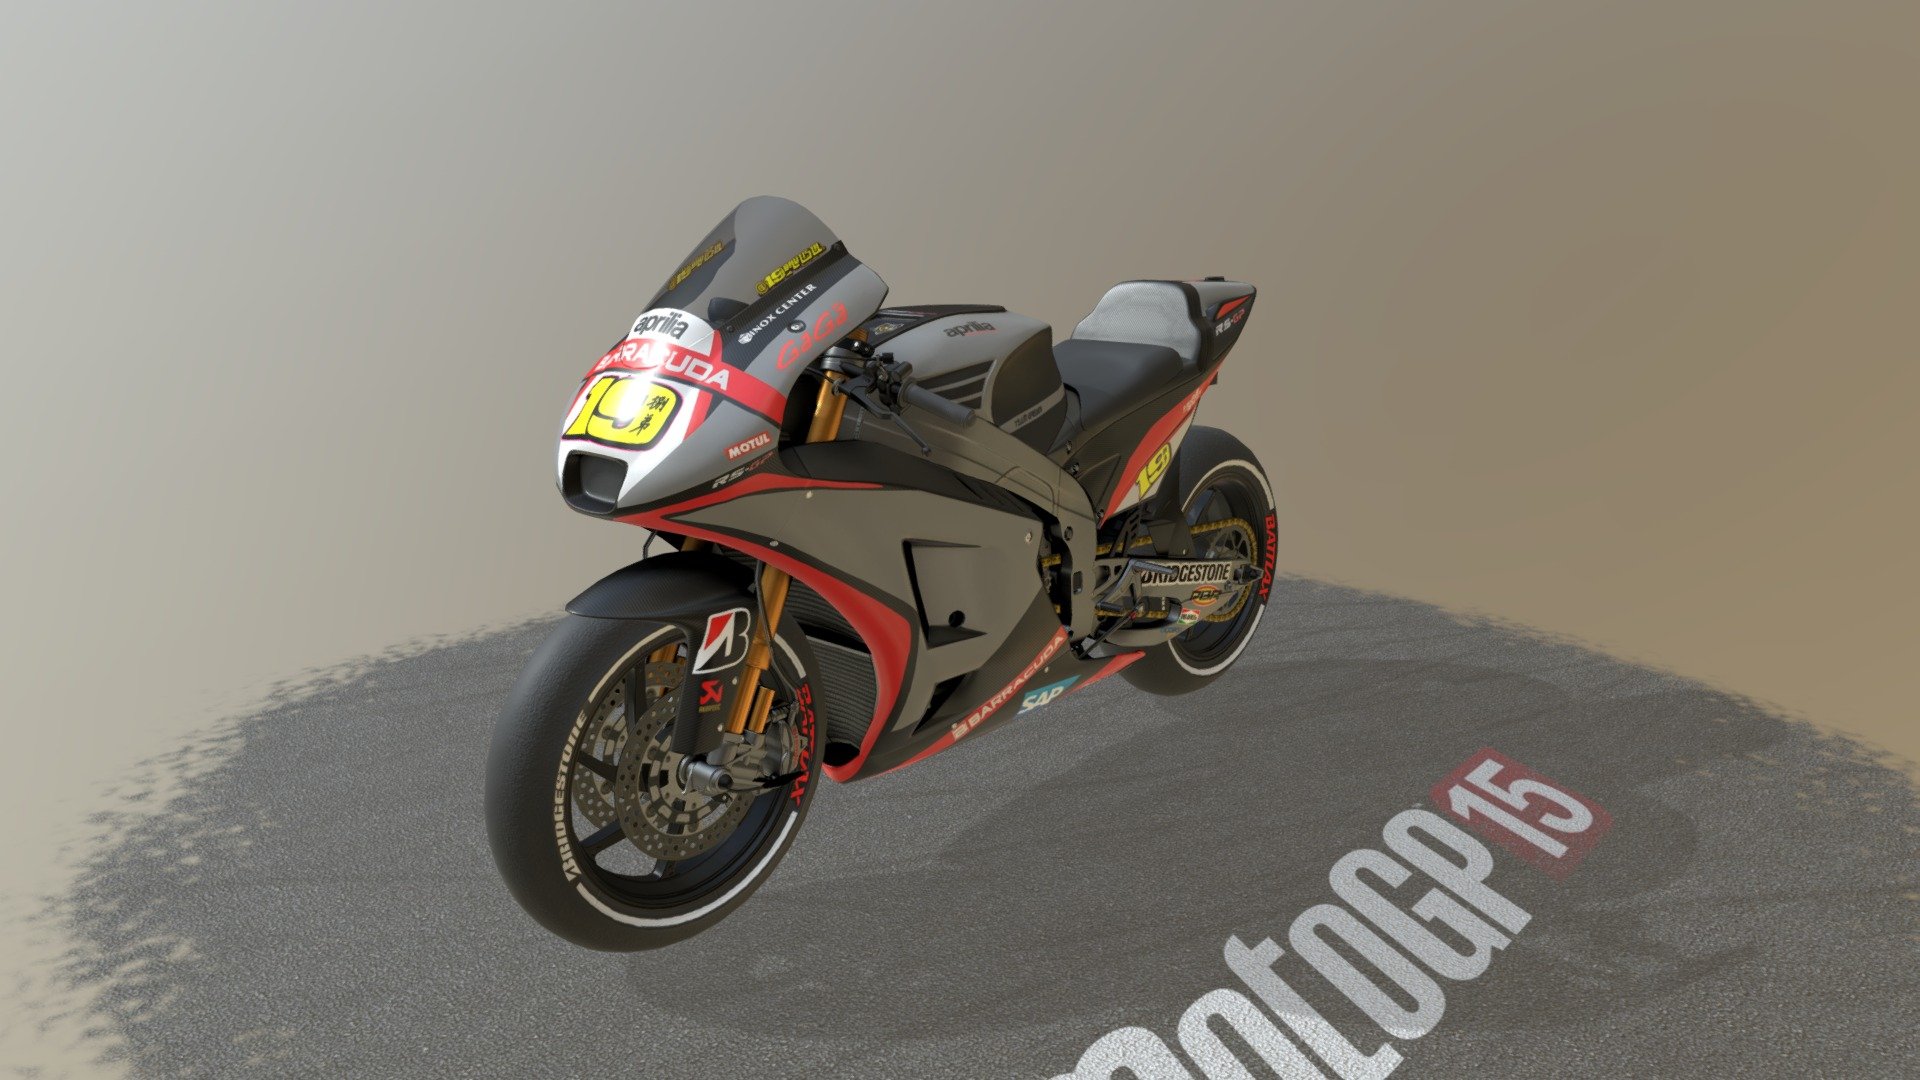 3D model of Aprilia RS-GP bike for Milestone’s MotoGP 2015 videogame 3d model